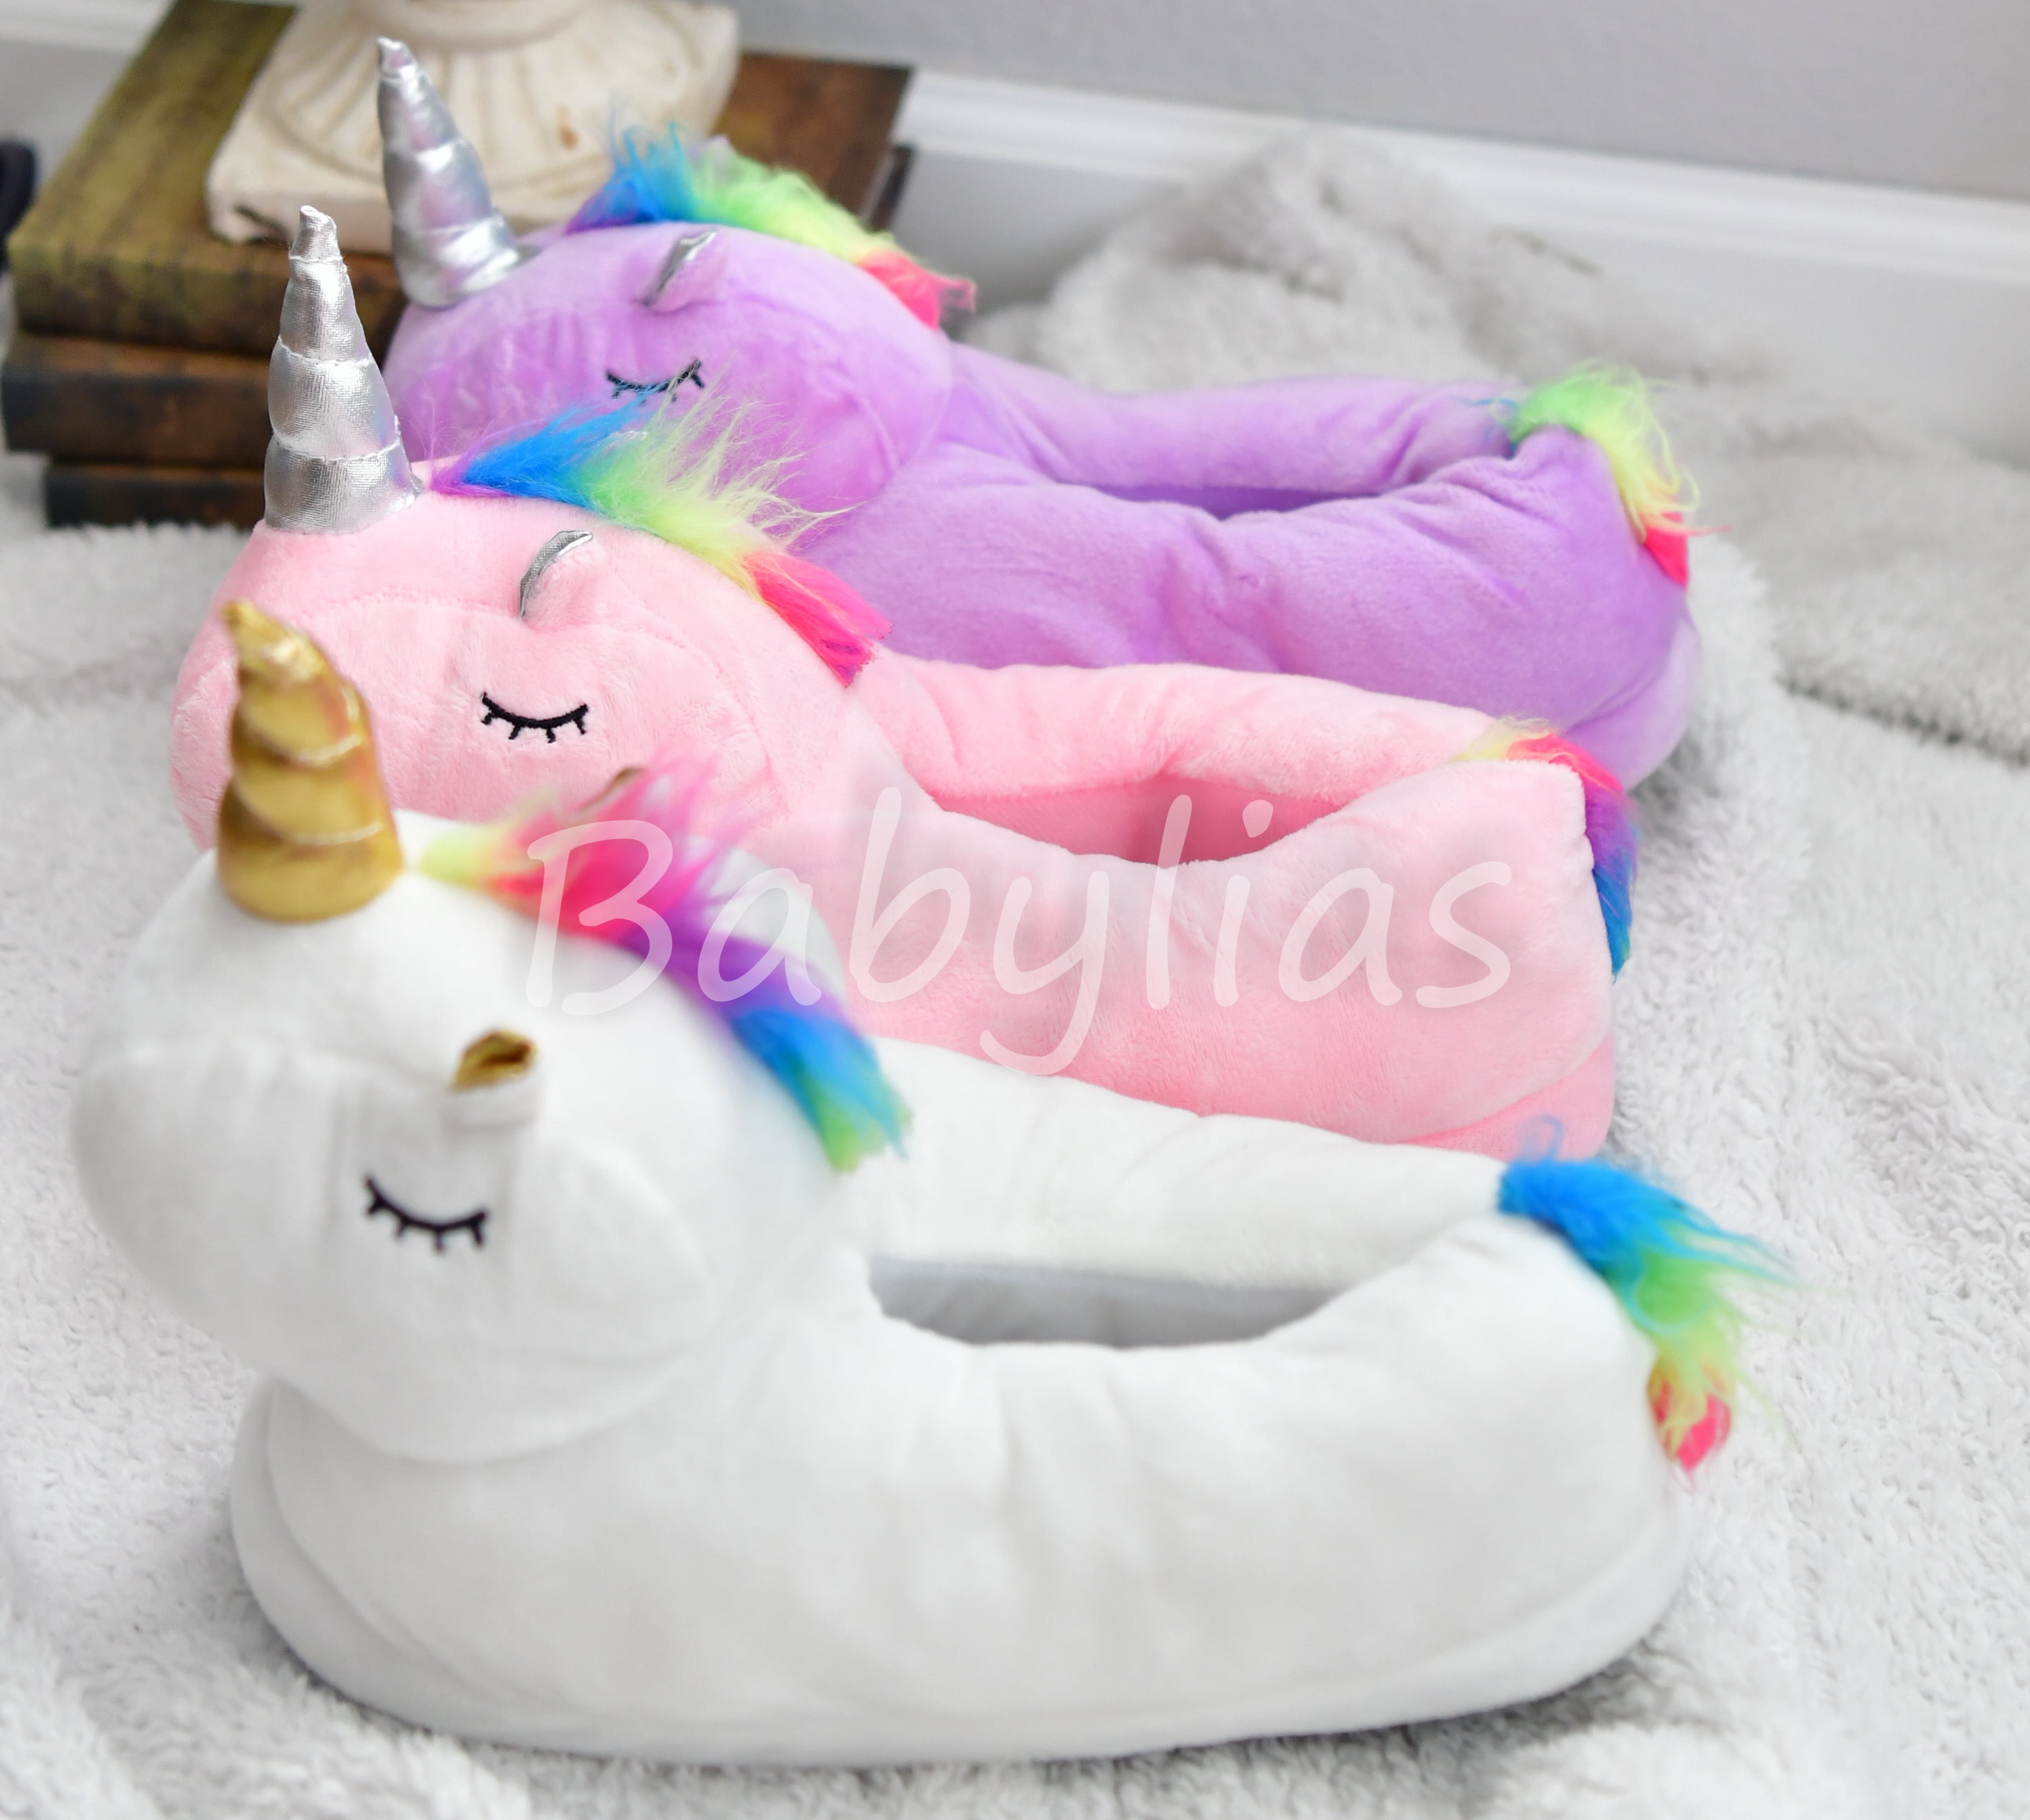 cat unicorn slippers walmart